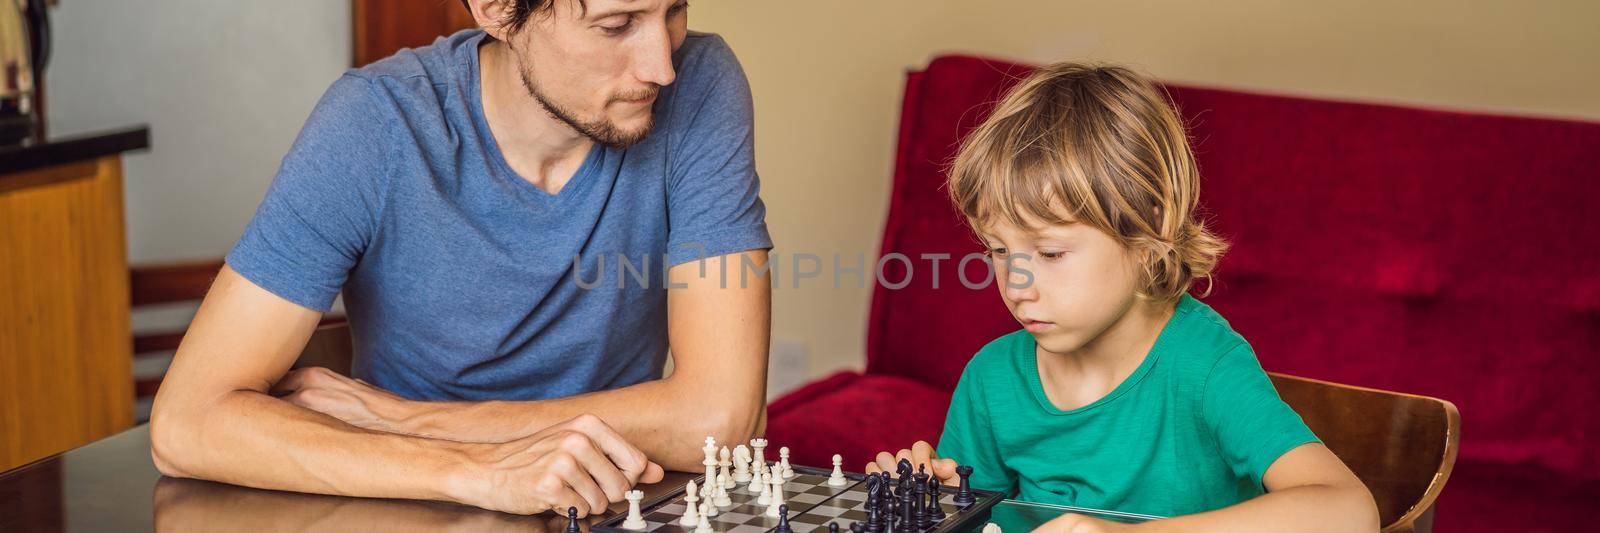 Happy Family Playing Board Game At Home BANNER, LONG FORMAT by galitskaya